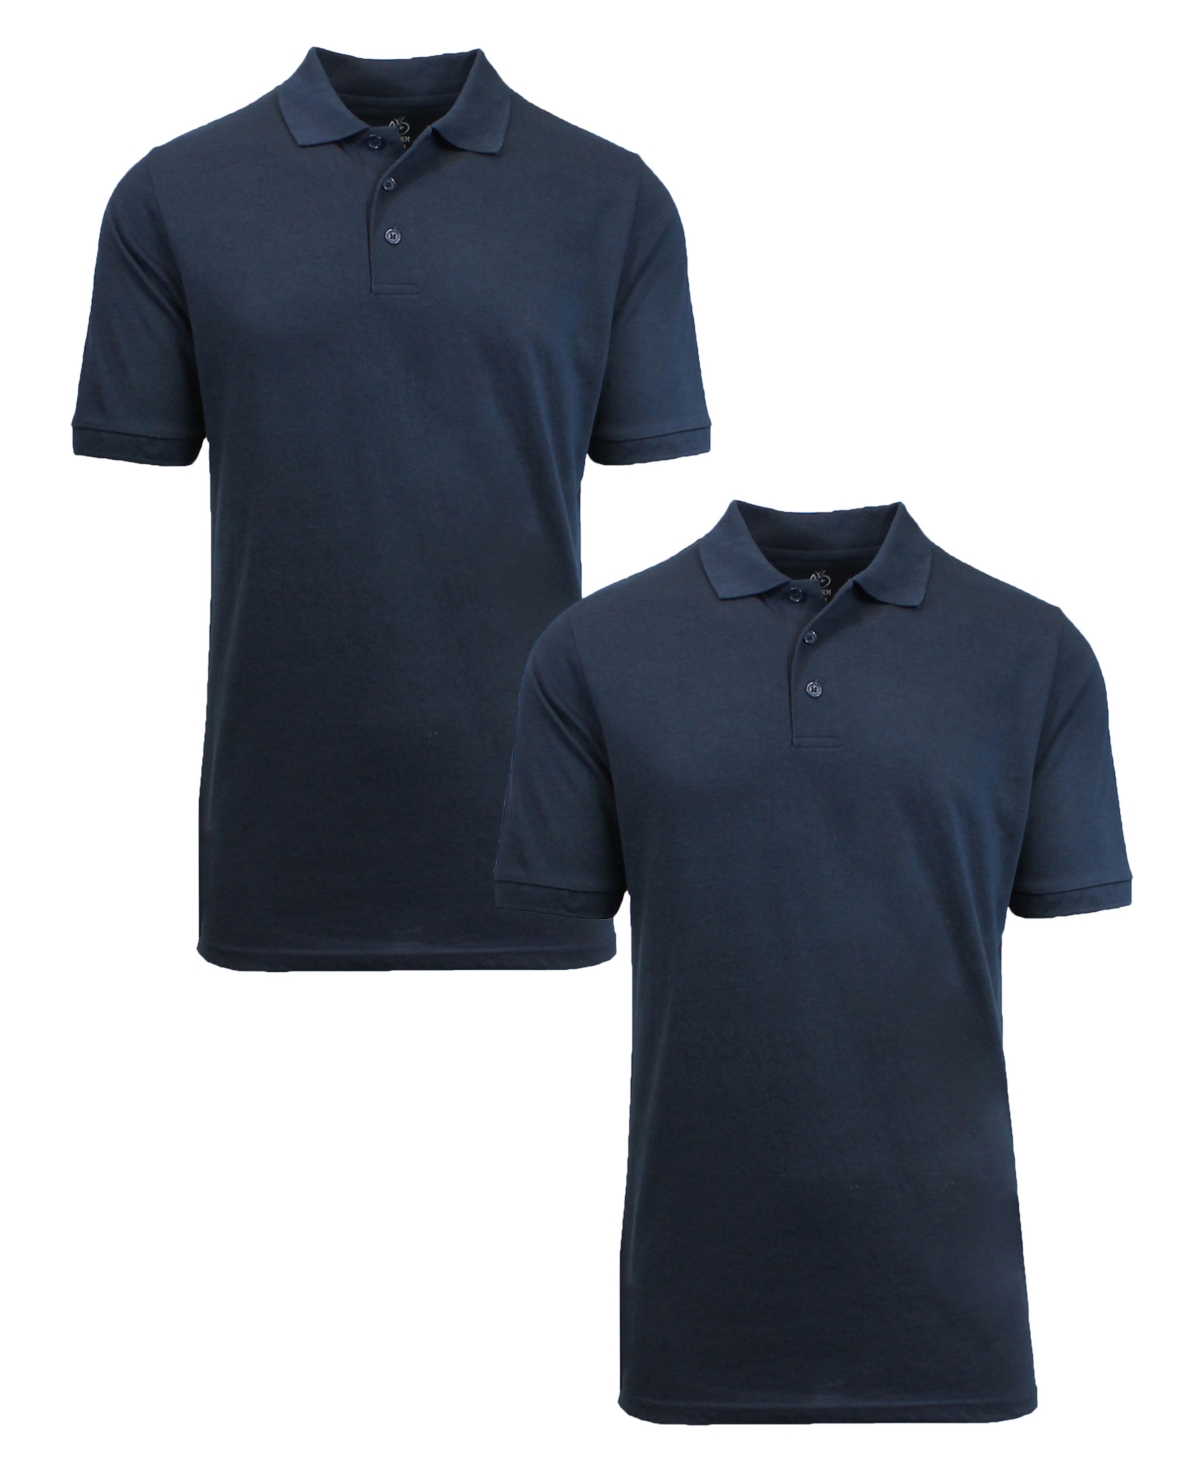 Men's Short Sleeve Pique Polo Shirt, Pack of 2 - Black